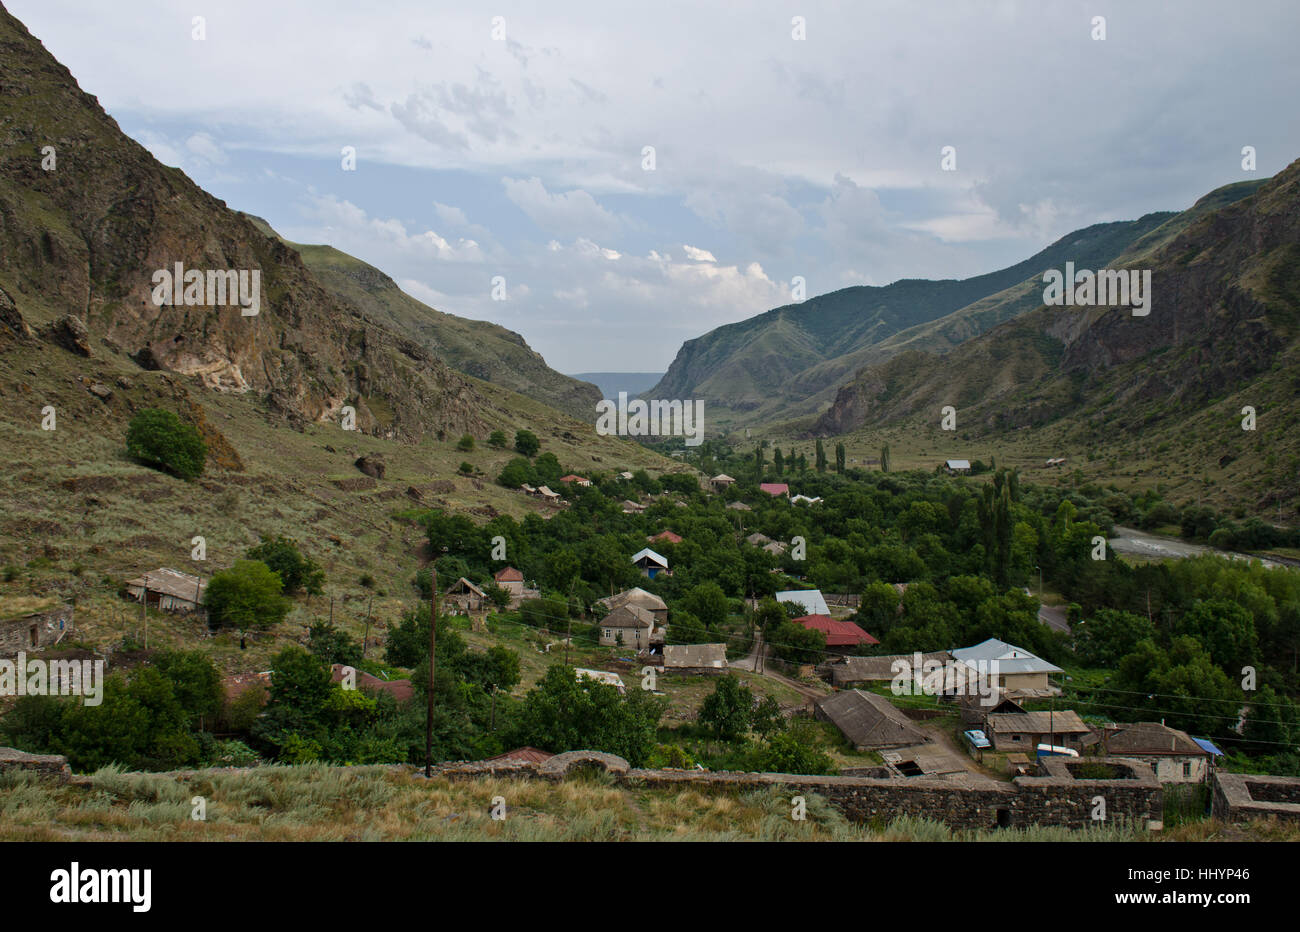 georgia, mountains, asia, europe, valley, sight, view, outlook, perspective, Stock Photo